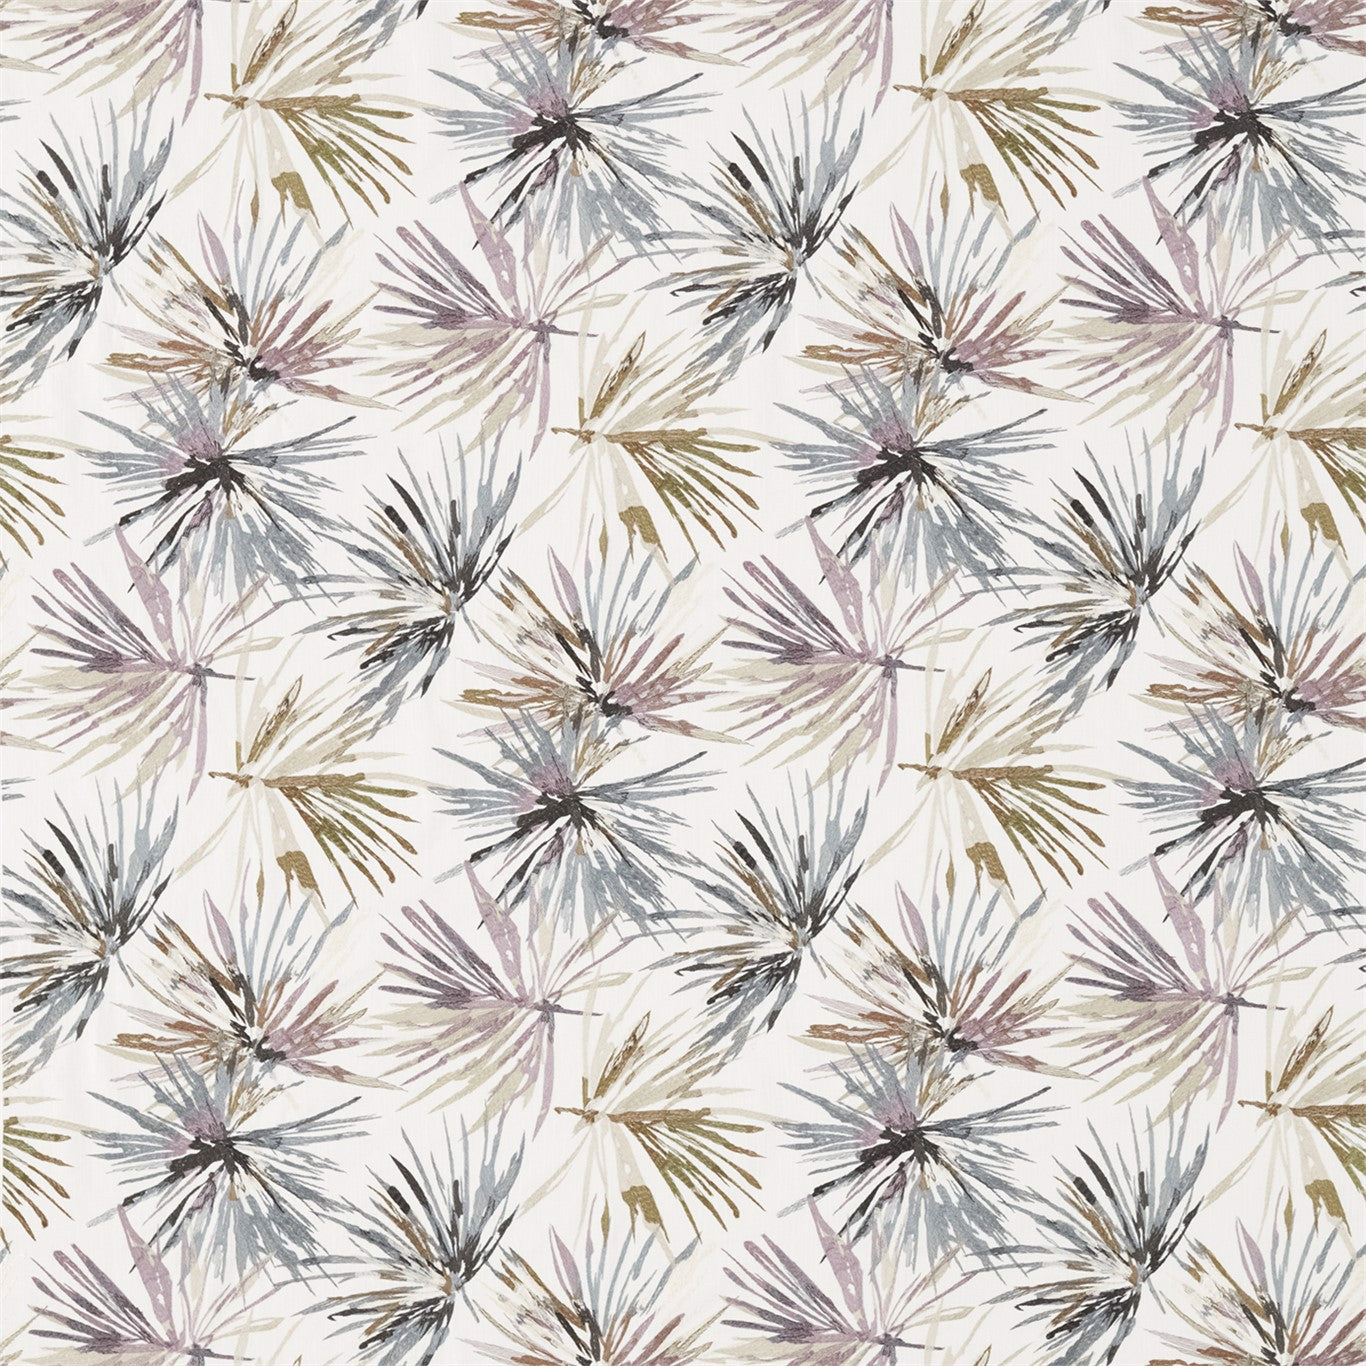 Aucuba Fabric by Harlequin - HMOE132249 - Heather/Slate